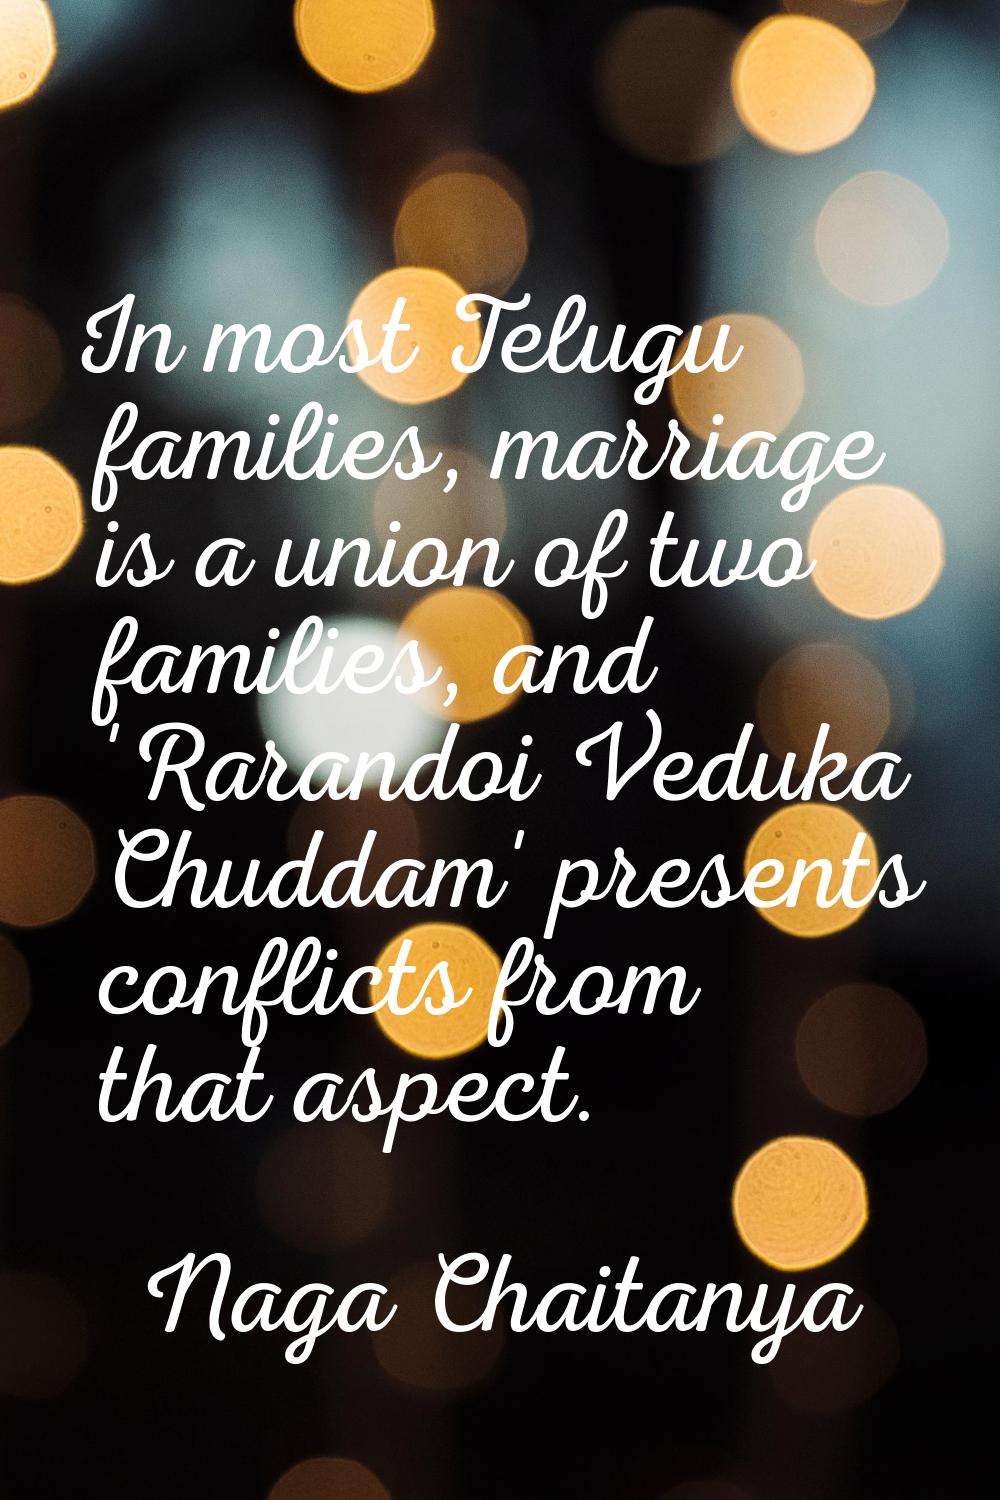 In most Telugu families, marriage is a union of two families, and 'Rarandoi Veduka Chuddam' present